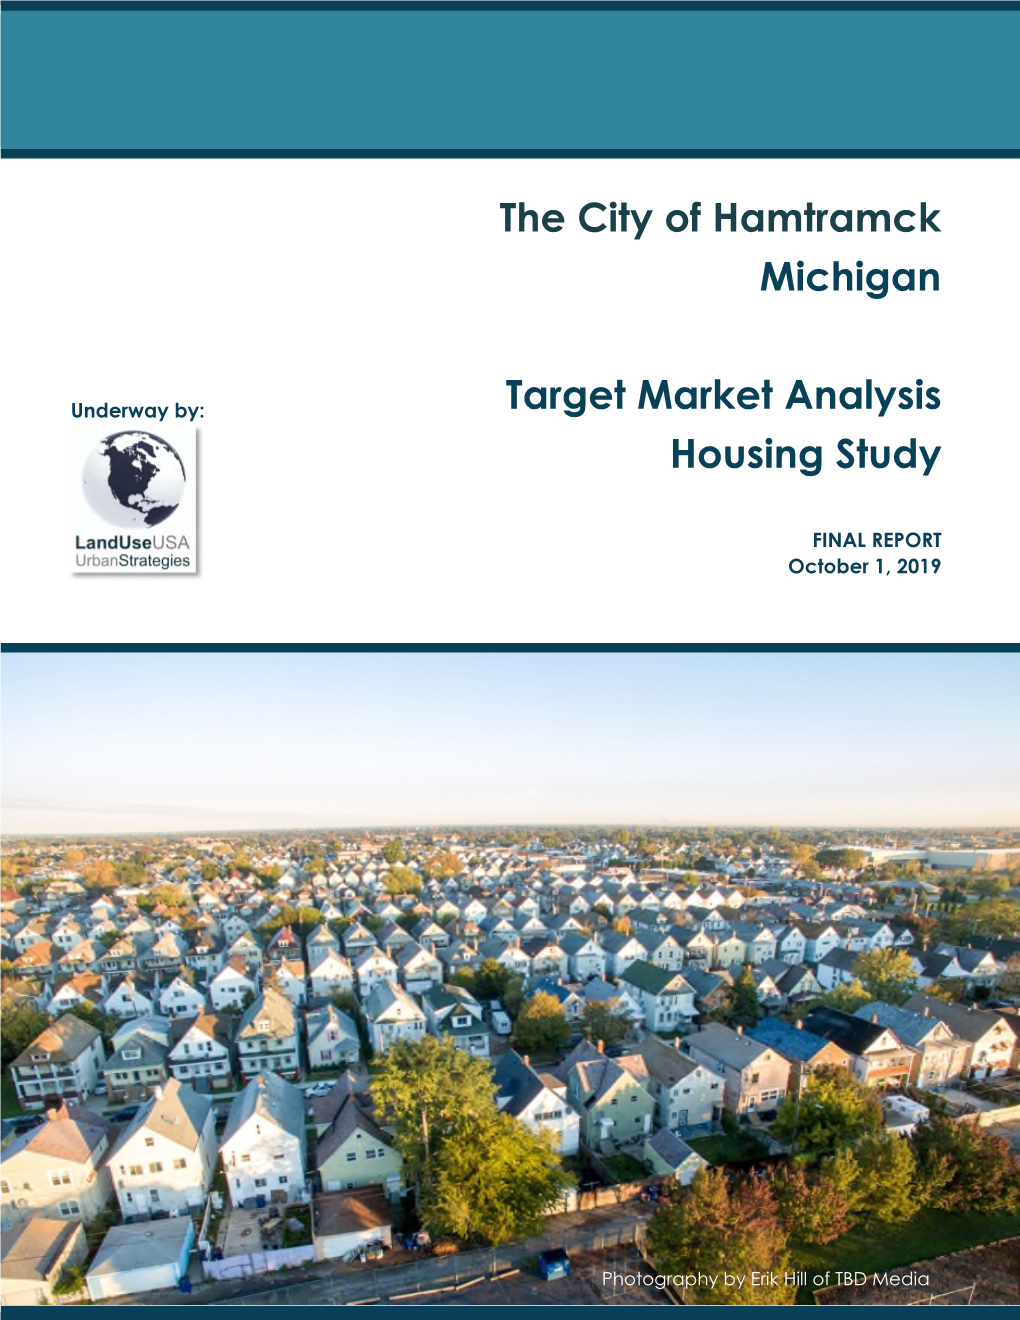 The City of Hamtramck Michigan Target Market Analysis Housing Study